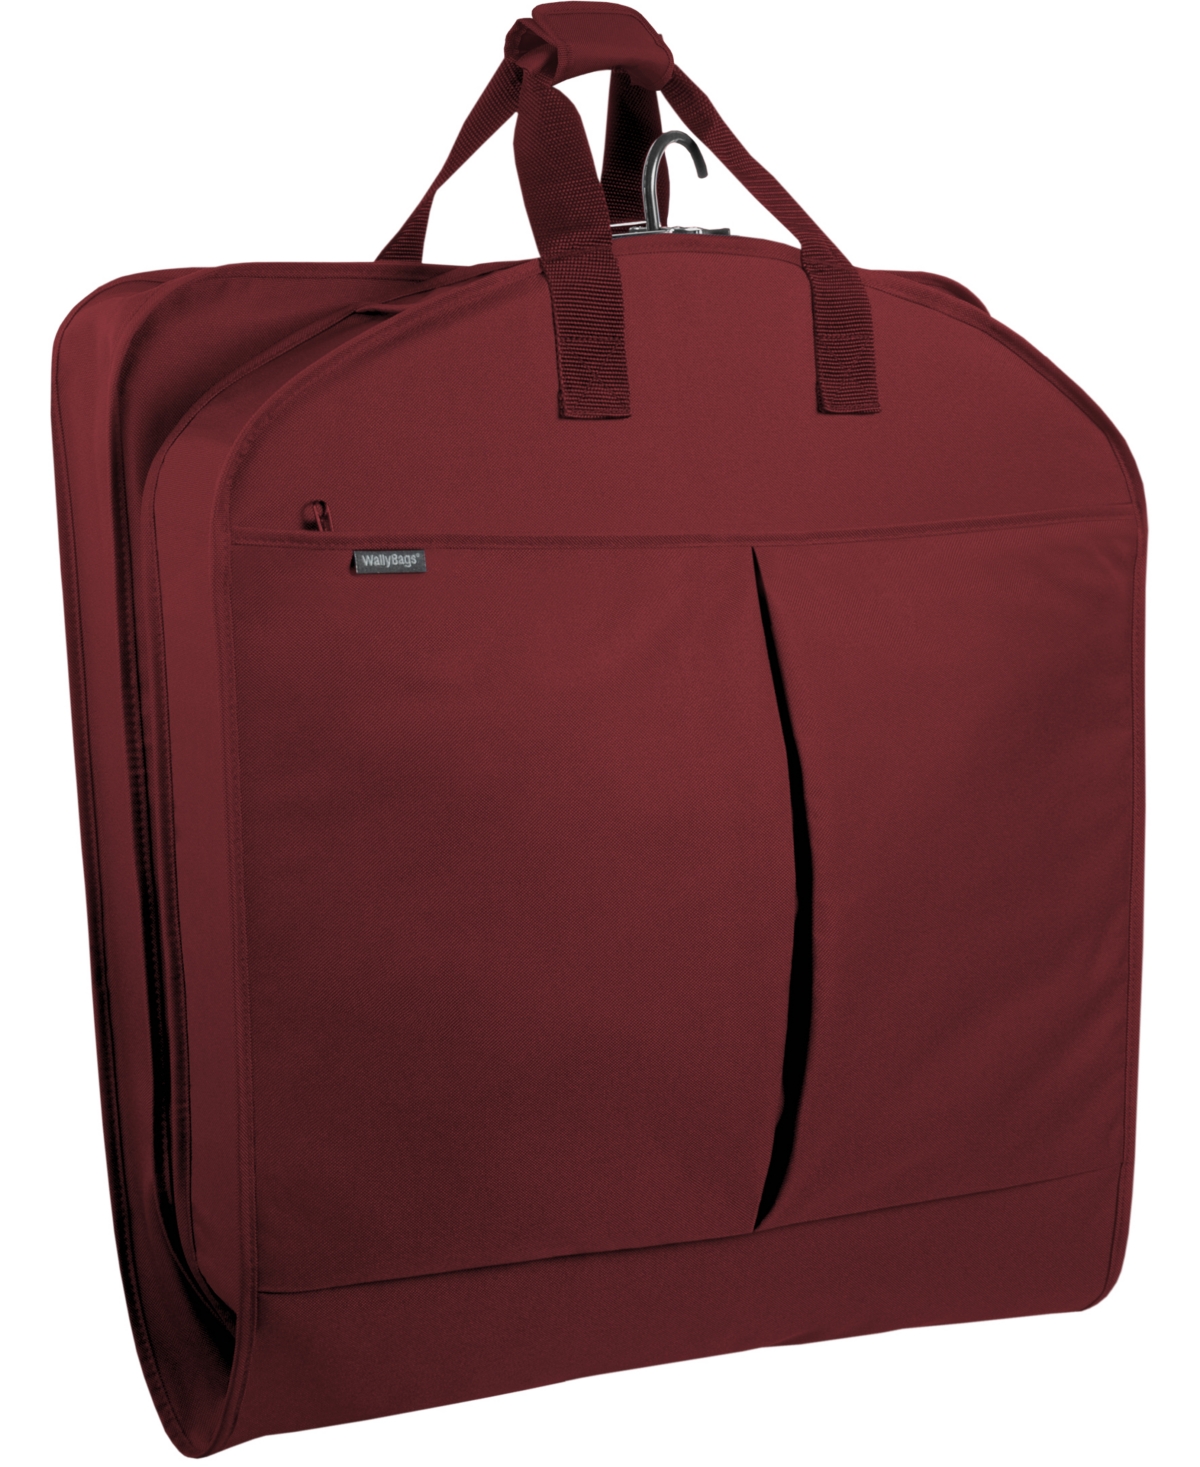 40" Deluxe Travel Garment Bag with Pockets - Merlot